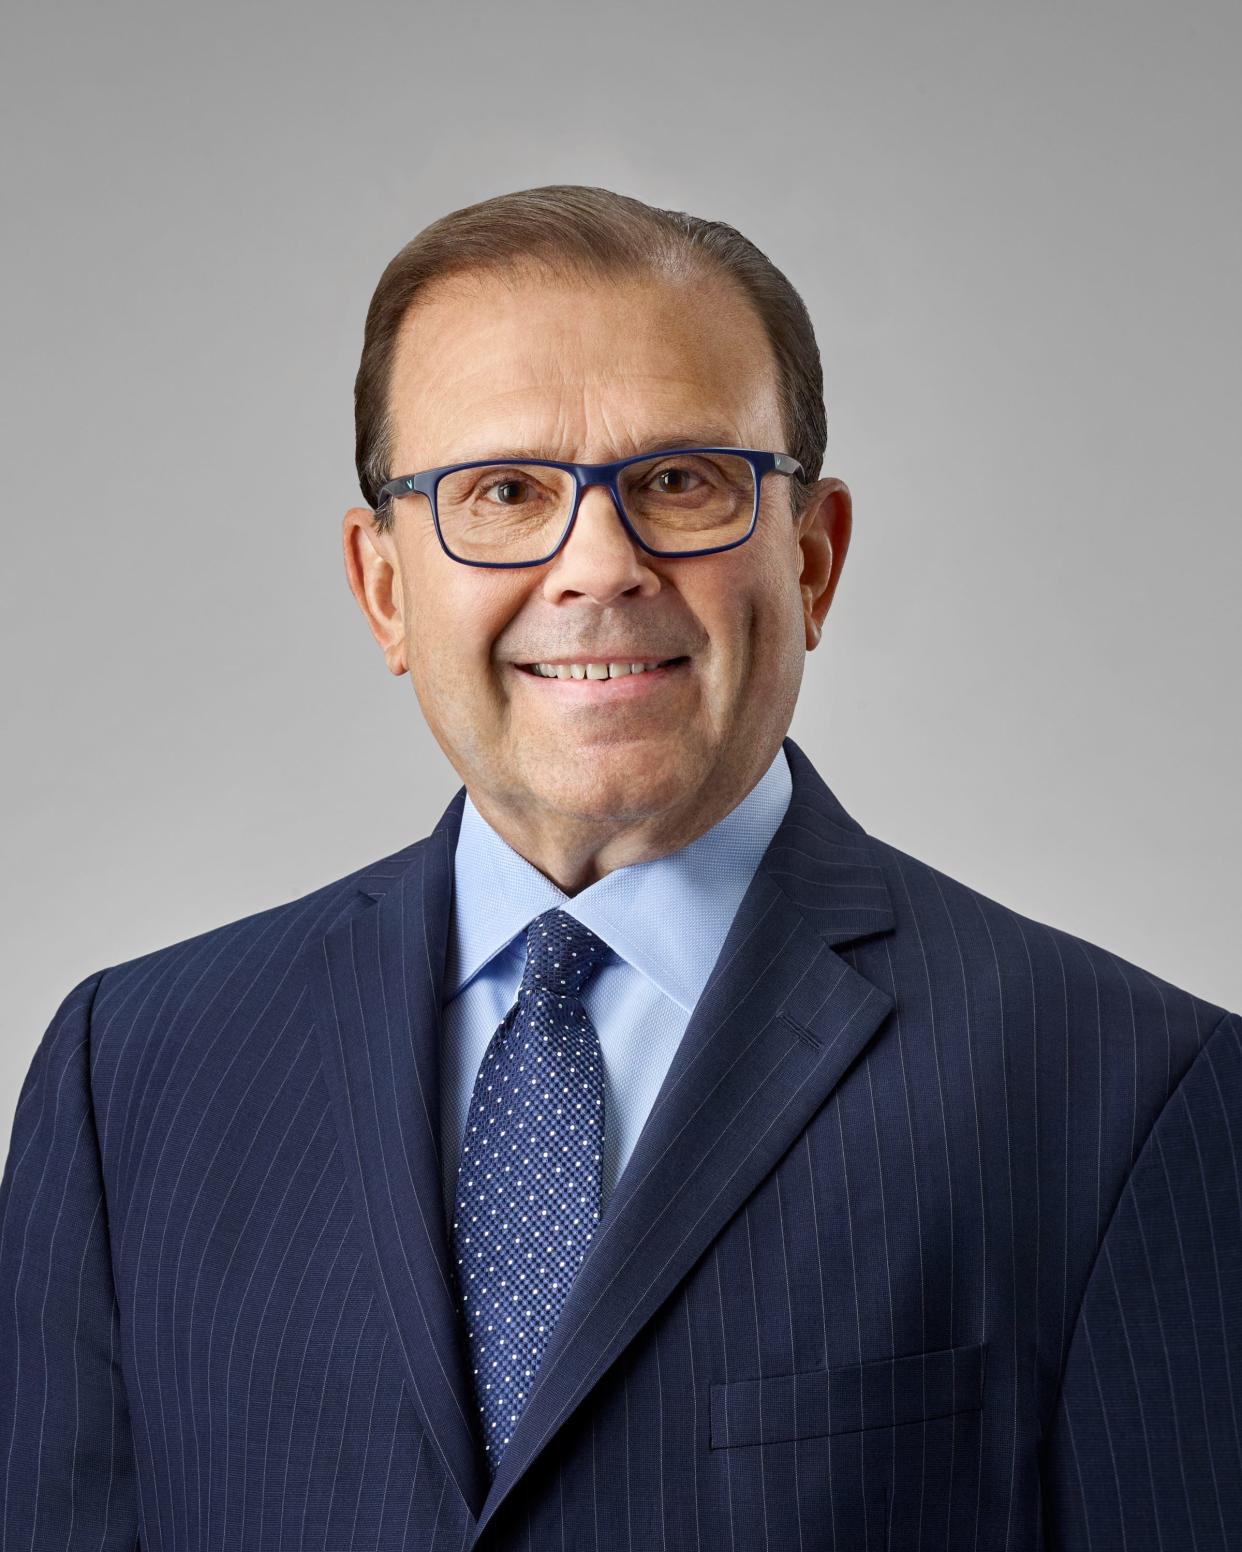 Daniel Loepp has been CEO of Blue Cross Blue Shield of Michigan since 2006.